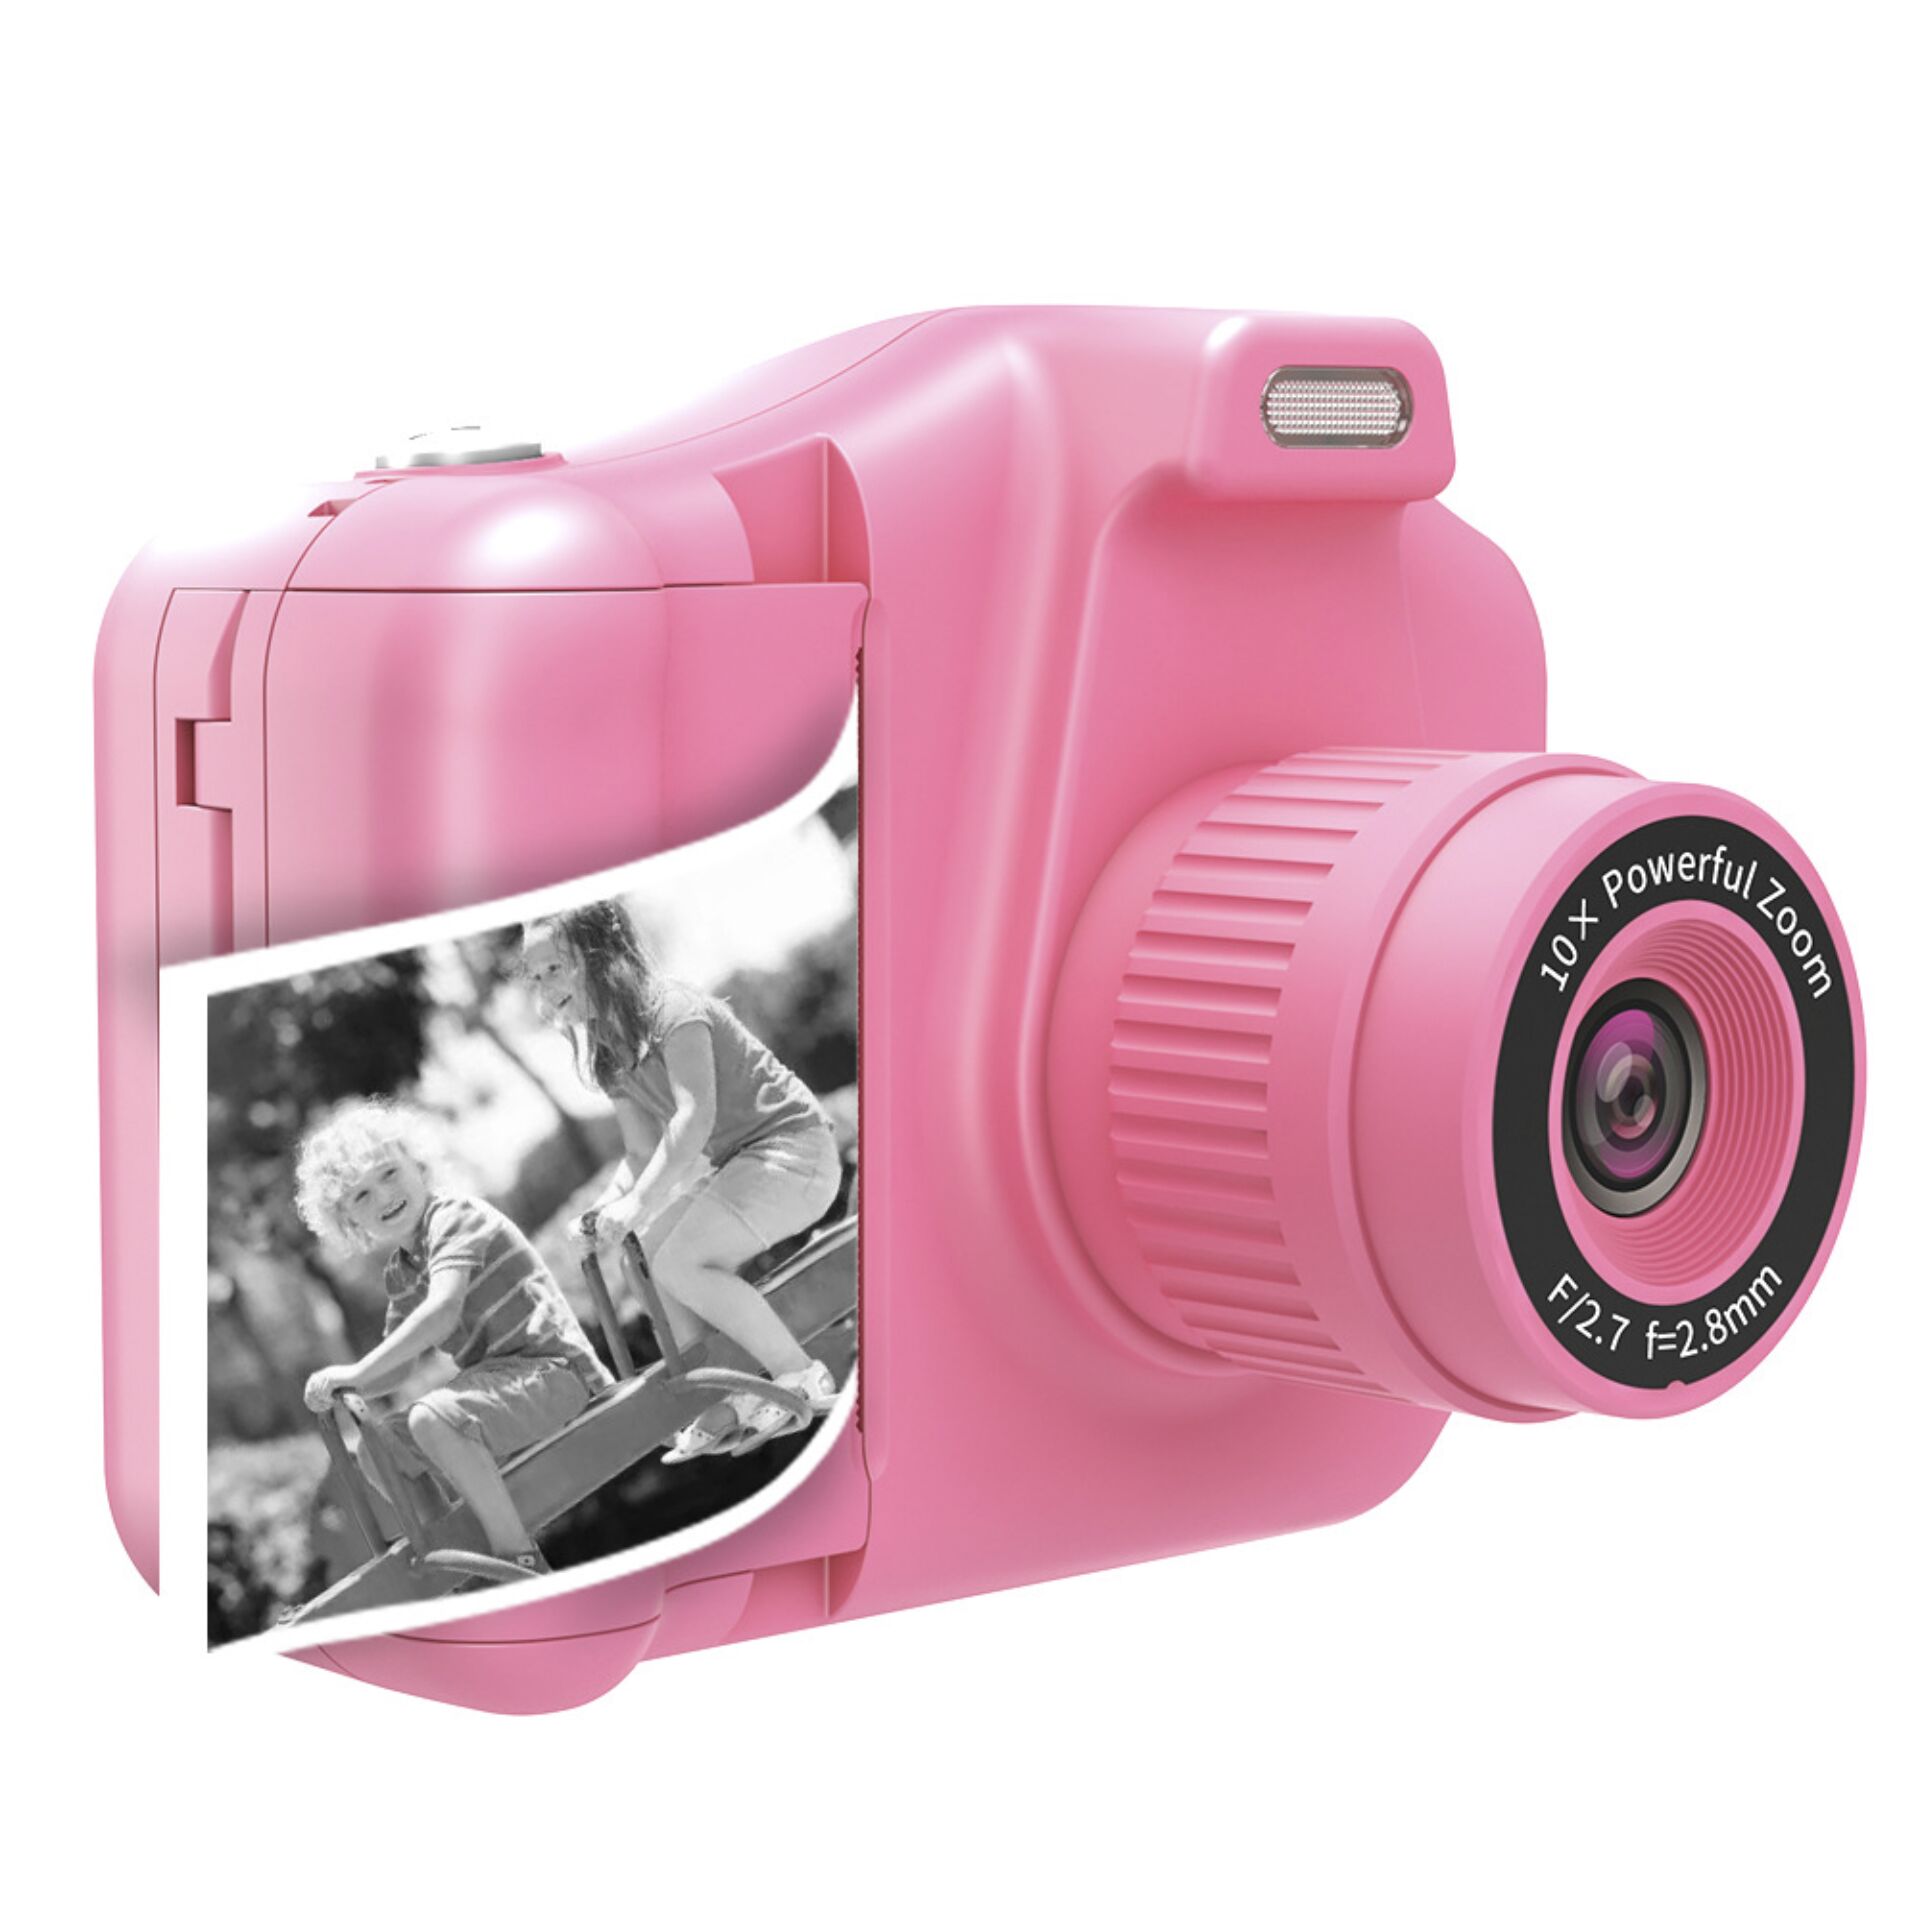 Denver KPC-1370 kids camera Pink with printer